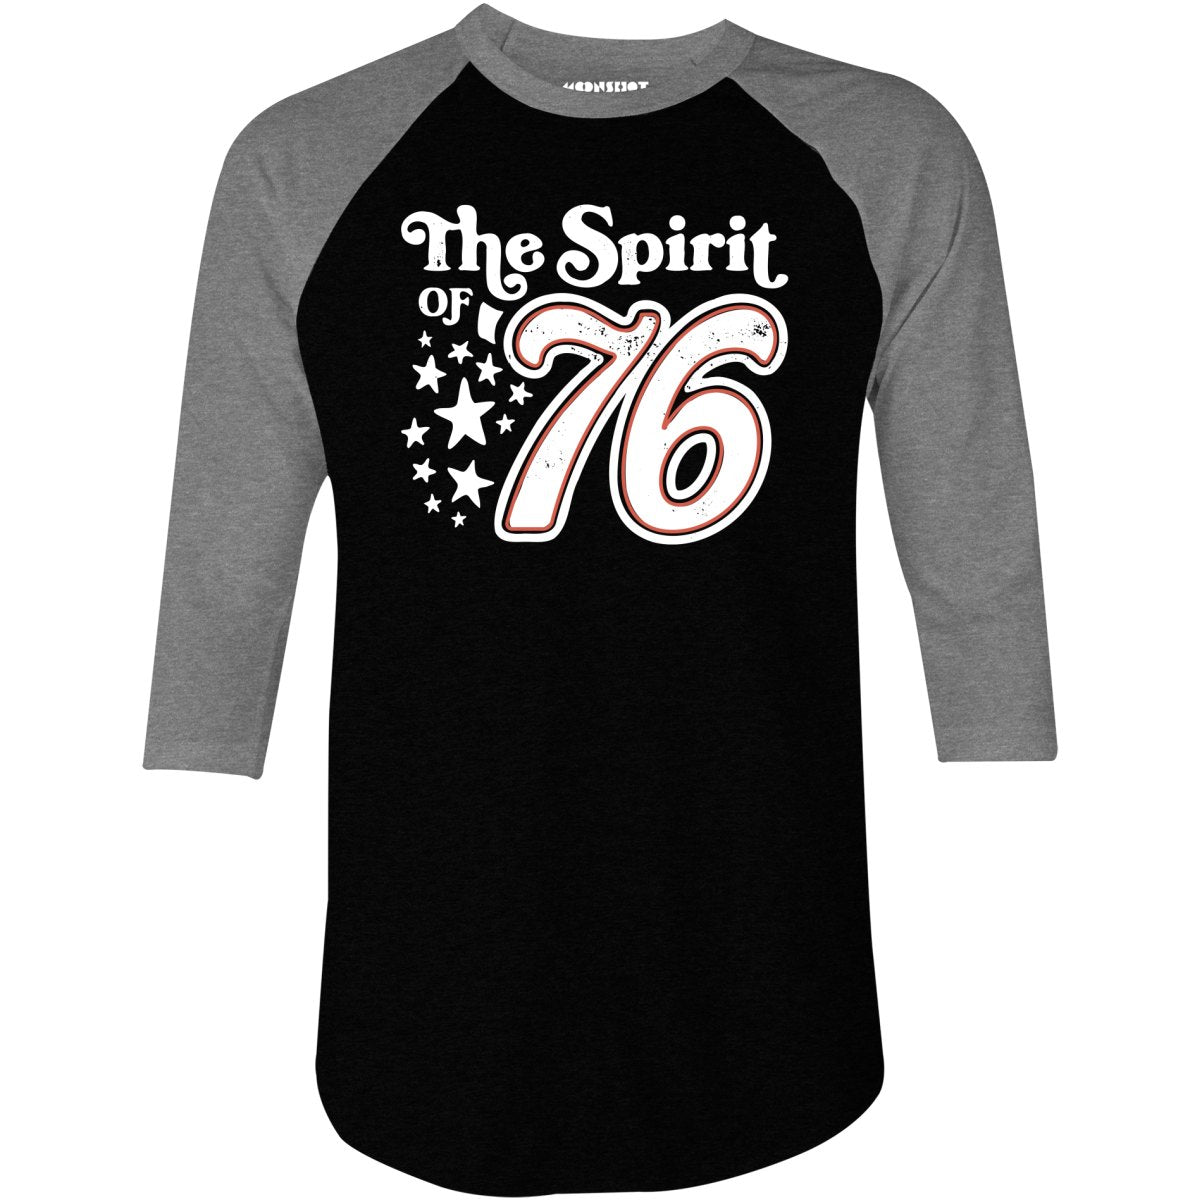 The Spirit of '76 - 3/4 Sleeve Raglan T-Shirt